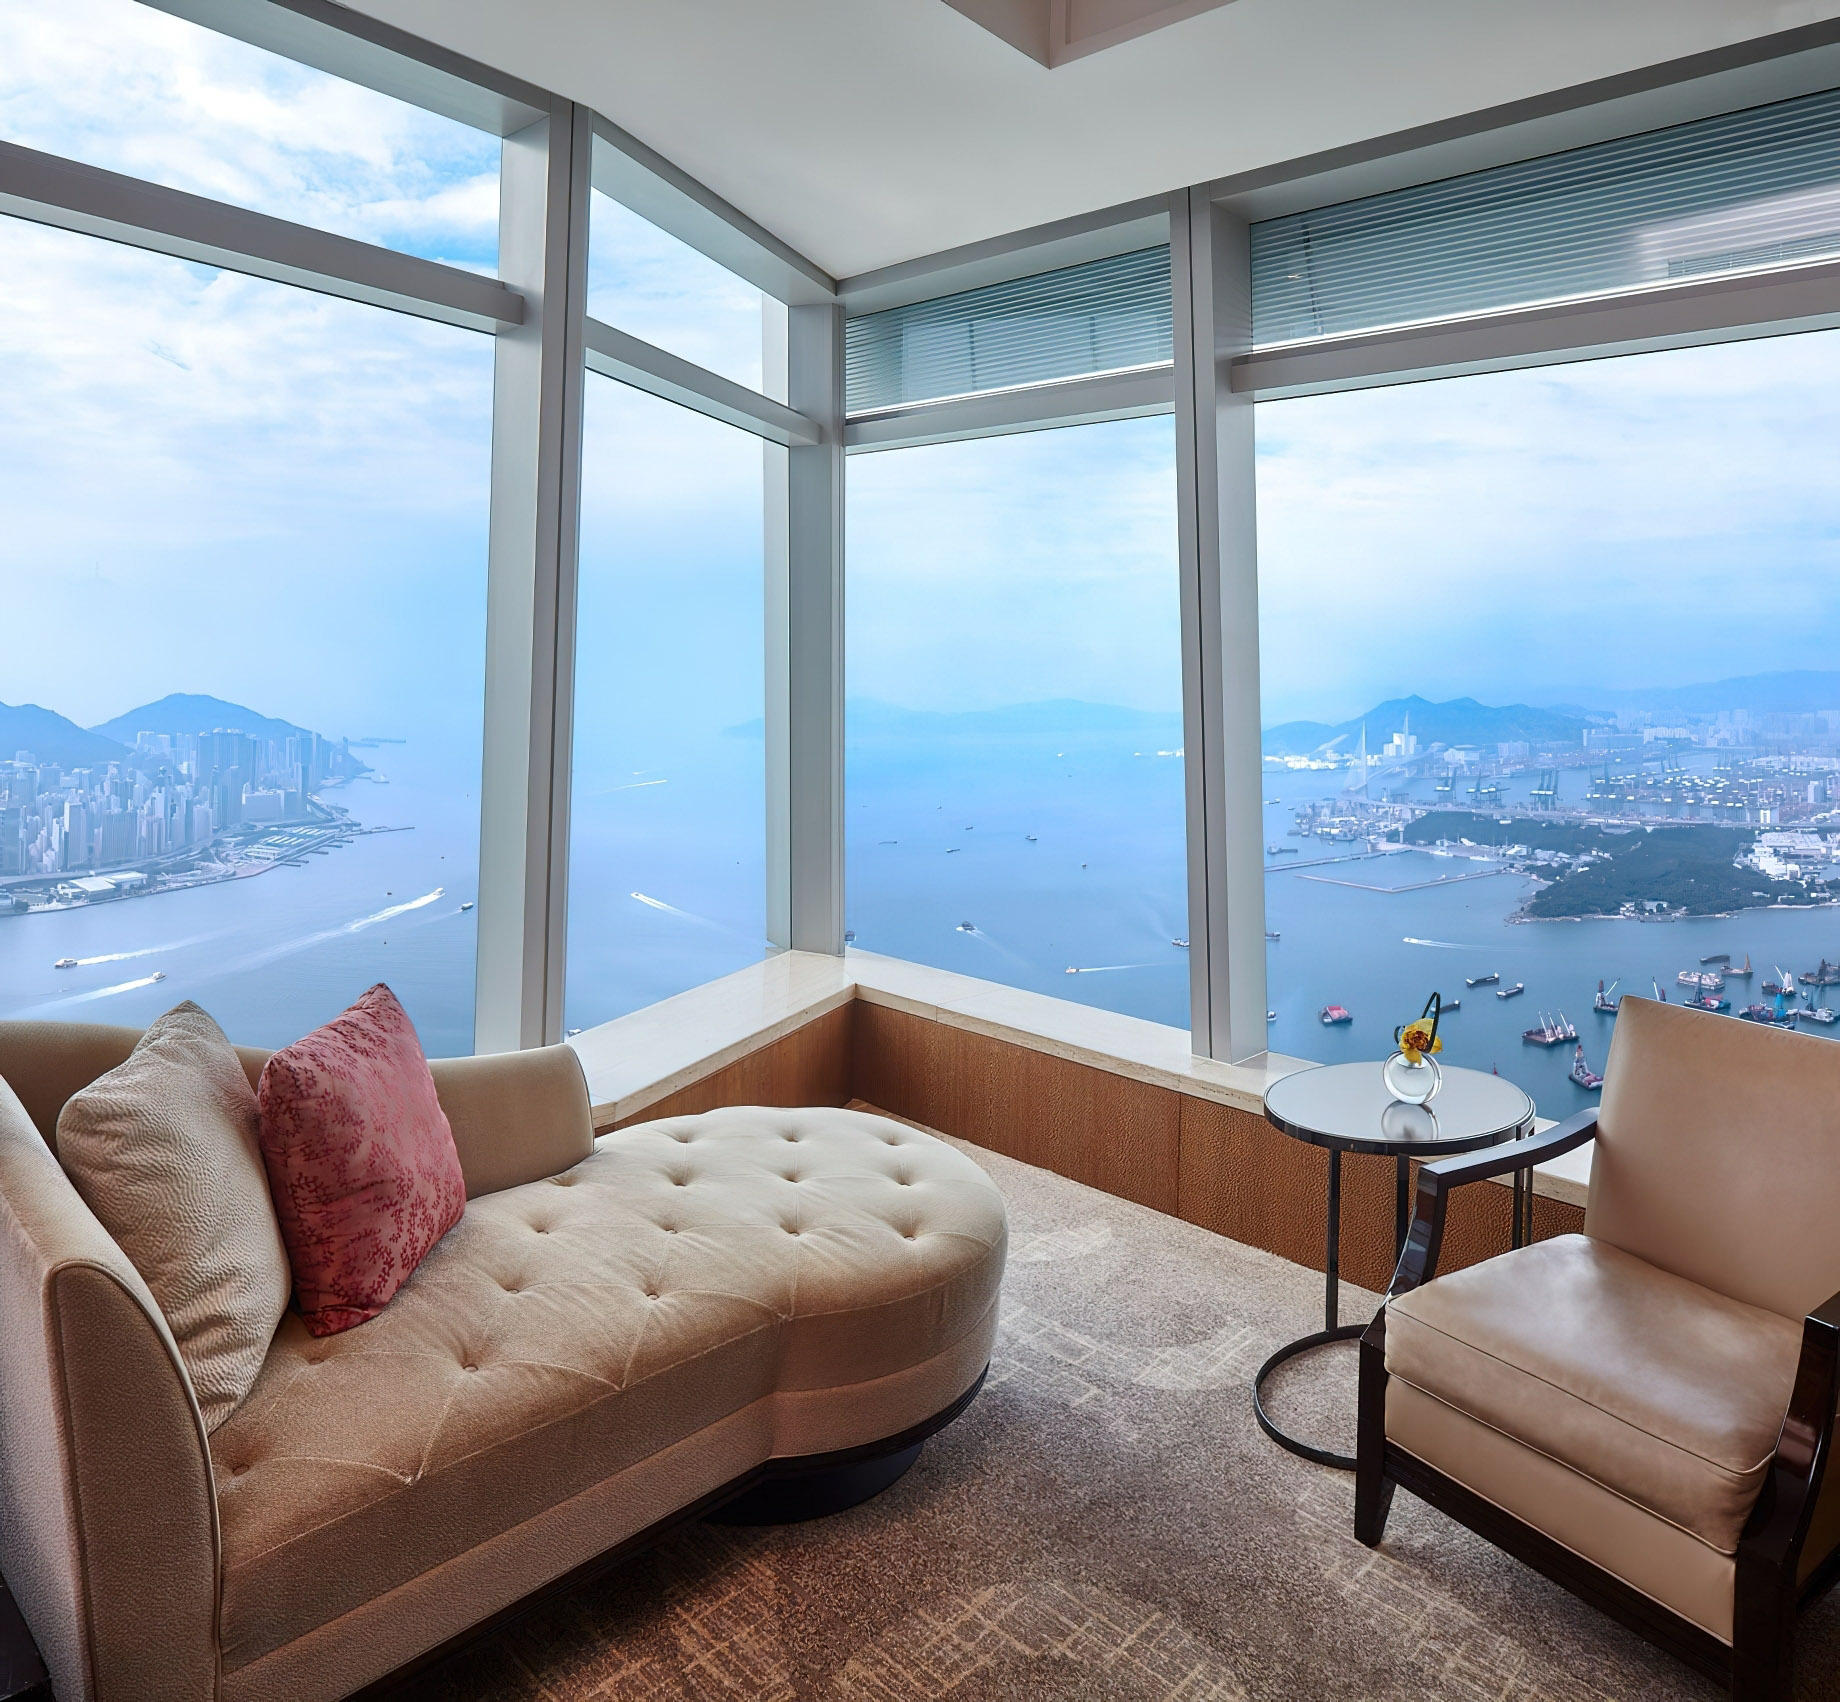 The Ritz-Carlton, Hong Kong Hotel - West Kowloon, Hong Kong - Deluxe Suite View